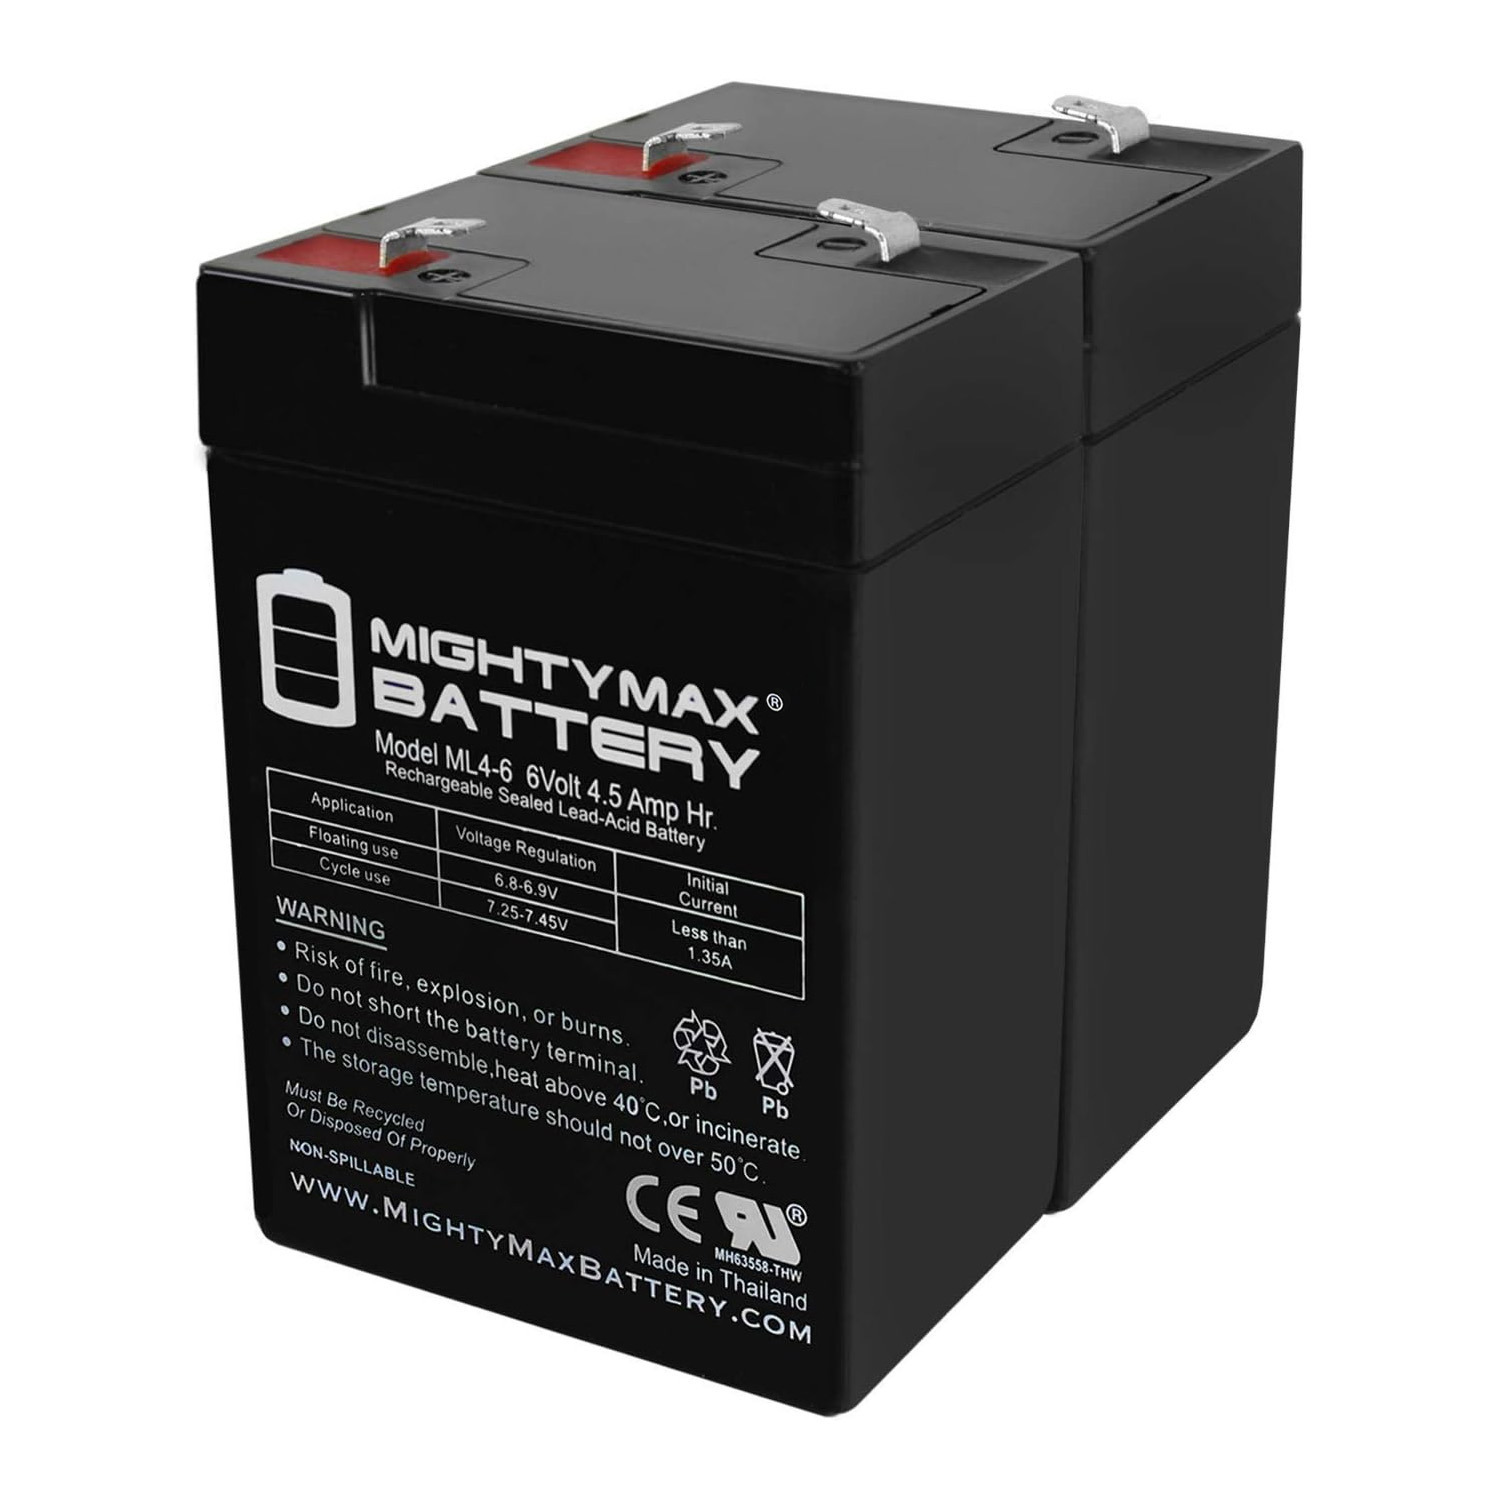 6V 4.5AH SLA Replacement Battery for Emergi-Lite M1-860004 - 2 Pack